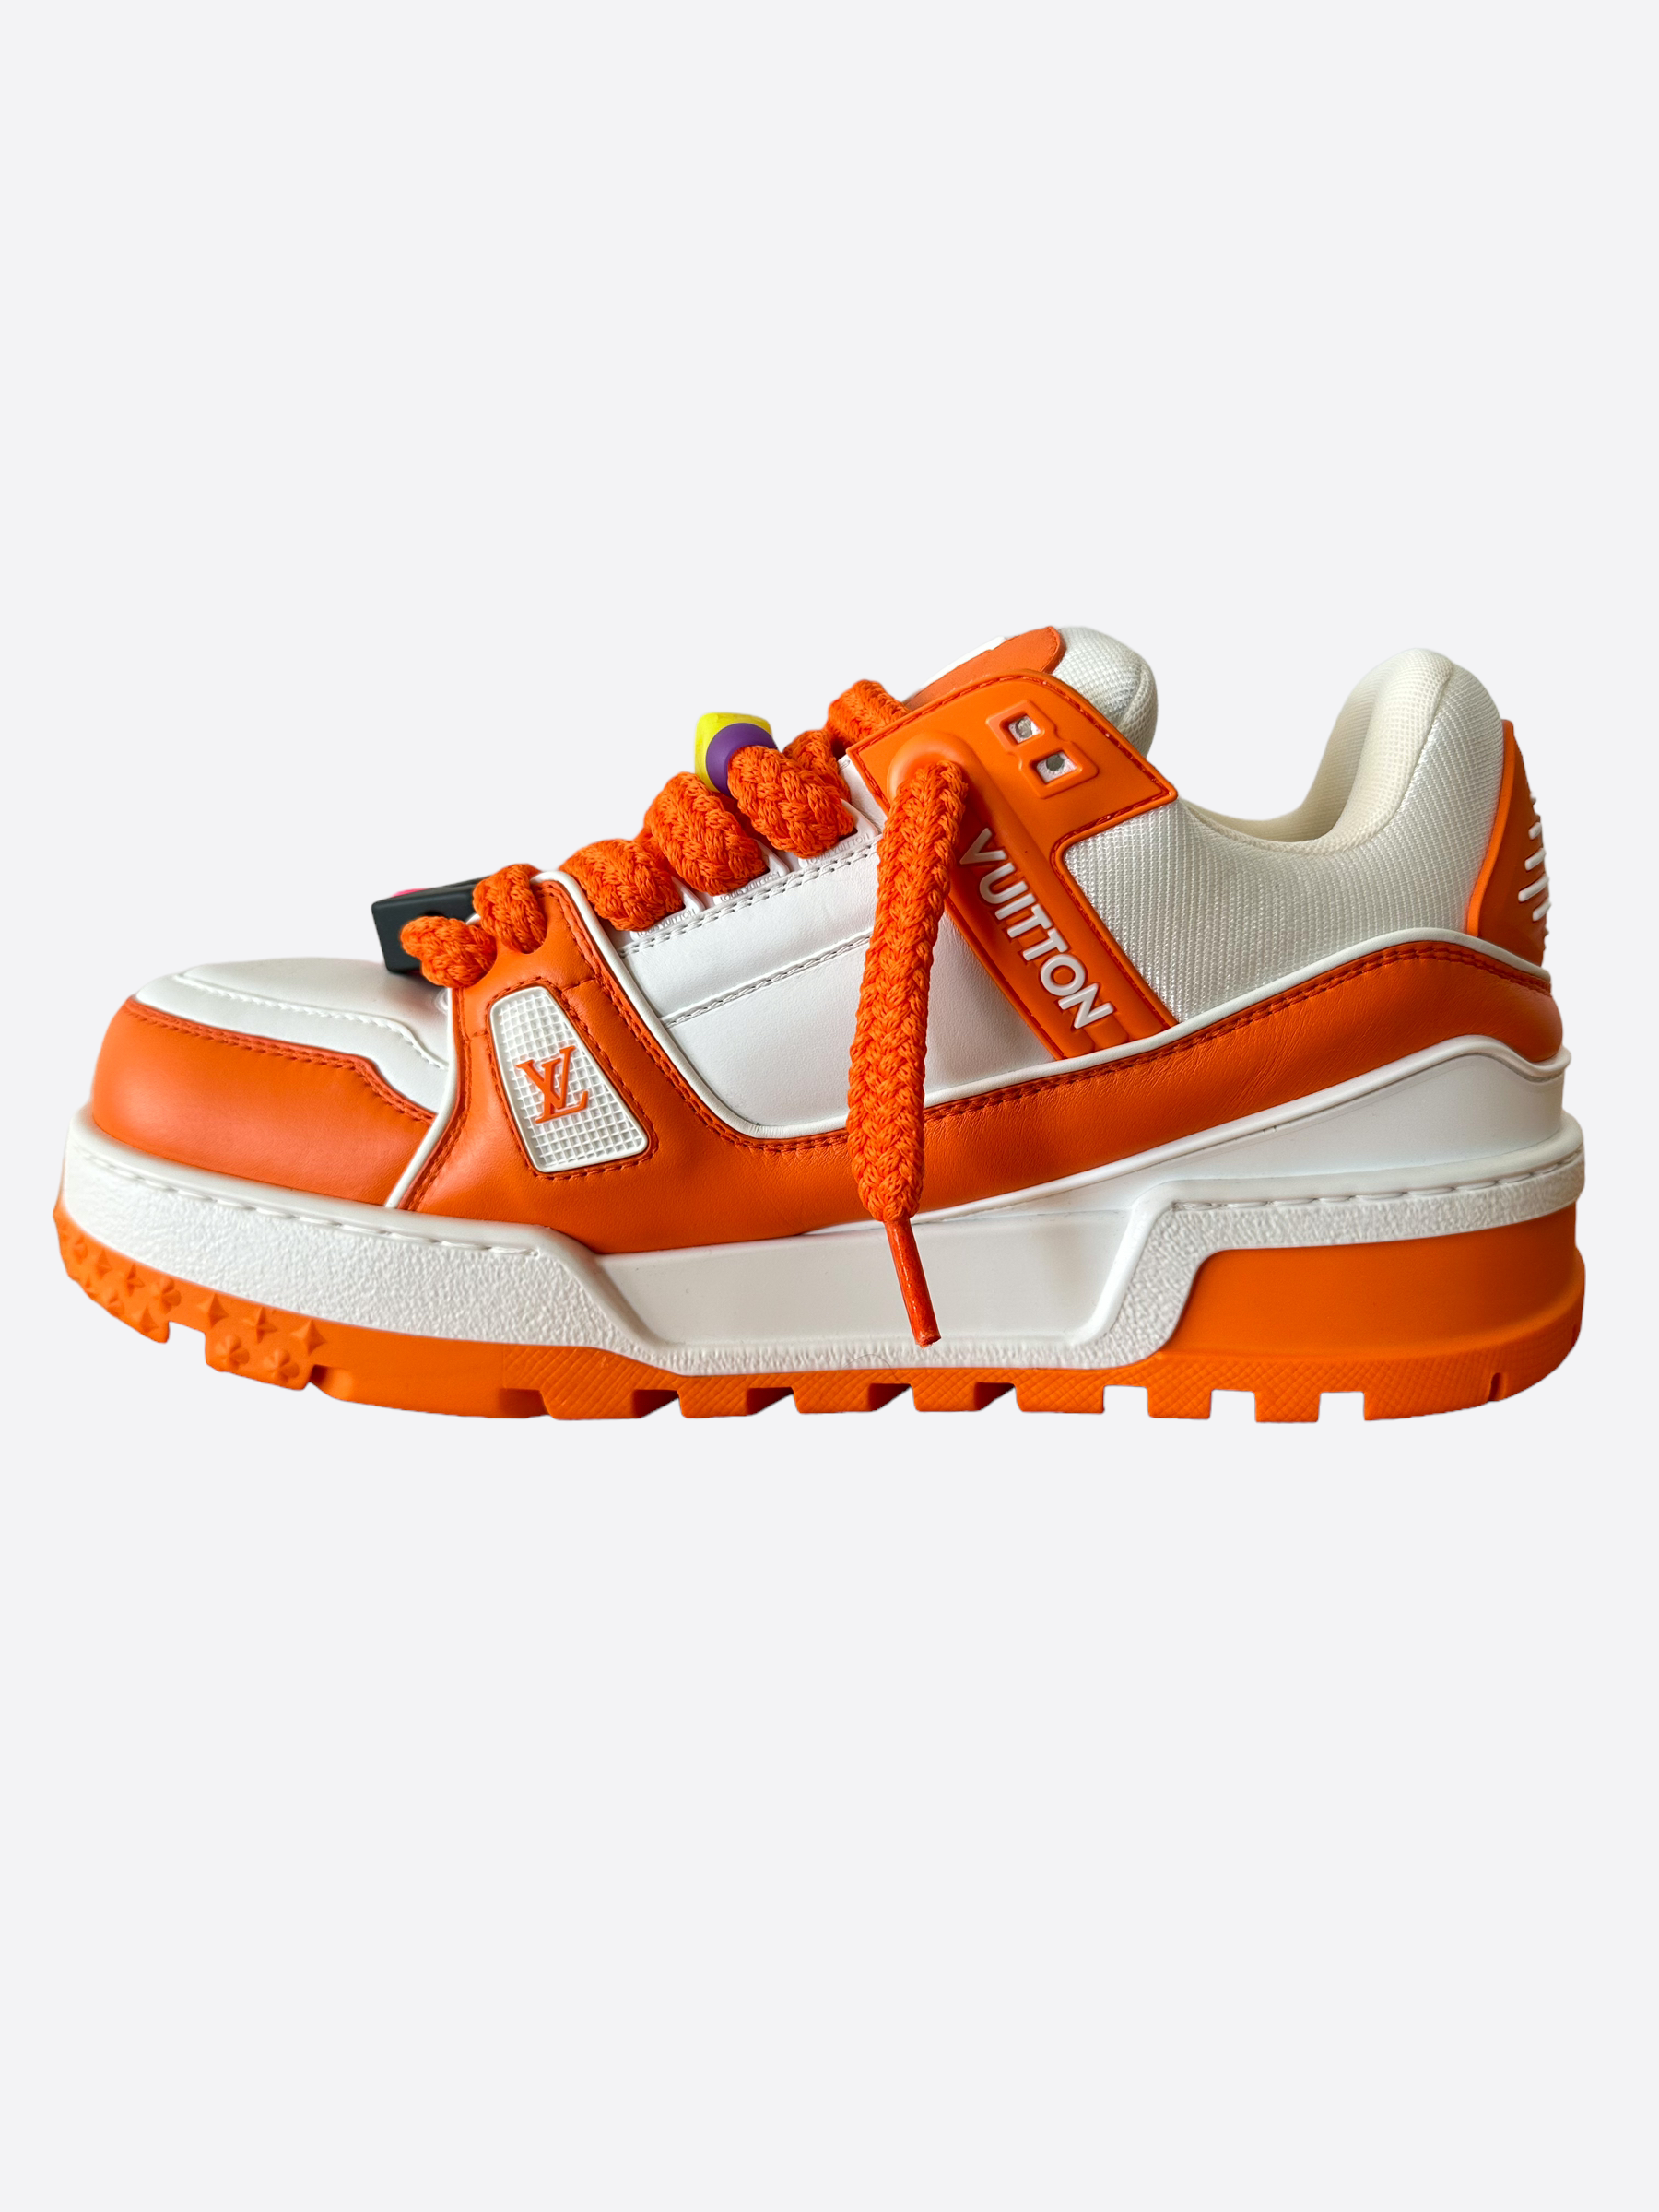 lv shoes orange